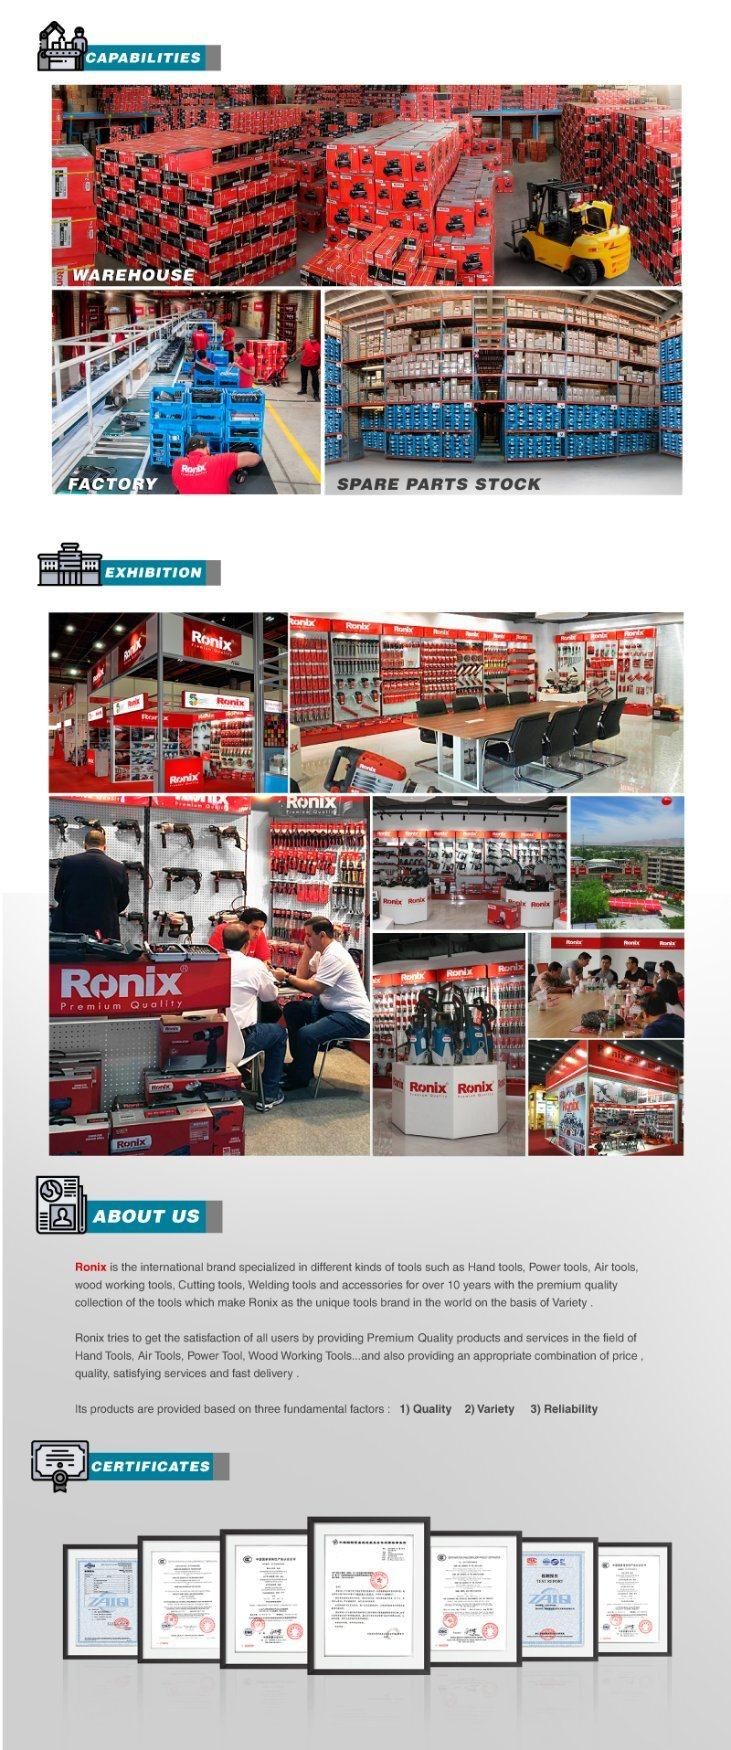 Ronix Hand Tools Model Rh-2035 9PCS Magnetic Hex Key Set Torx Key